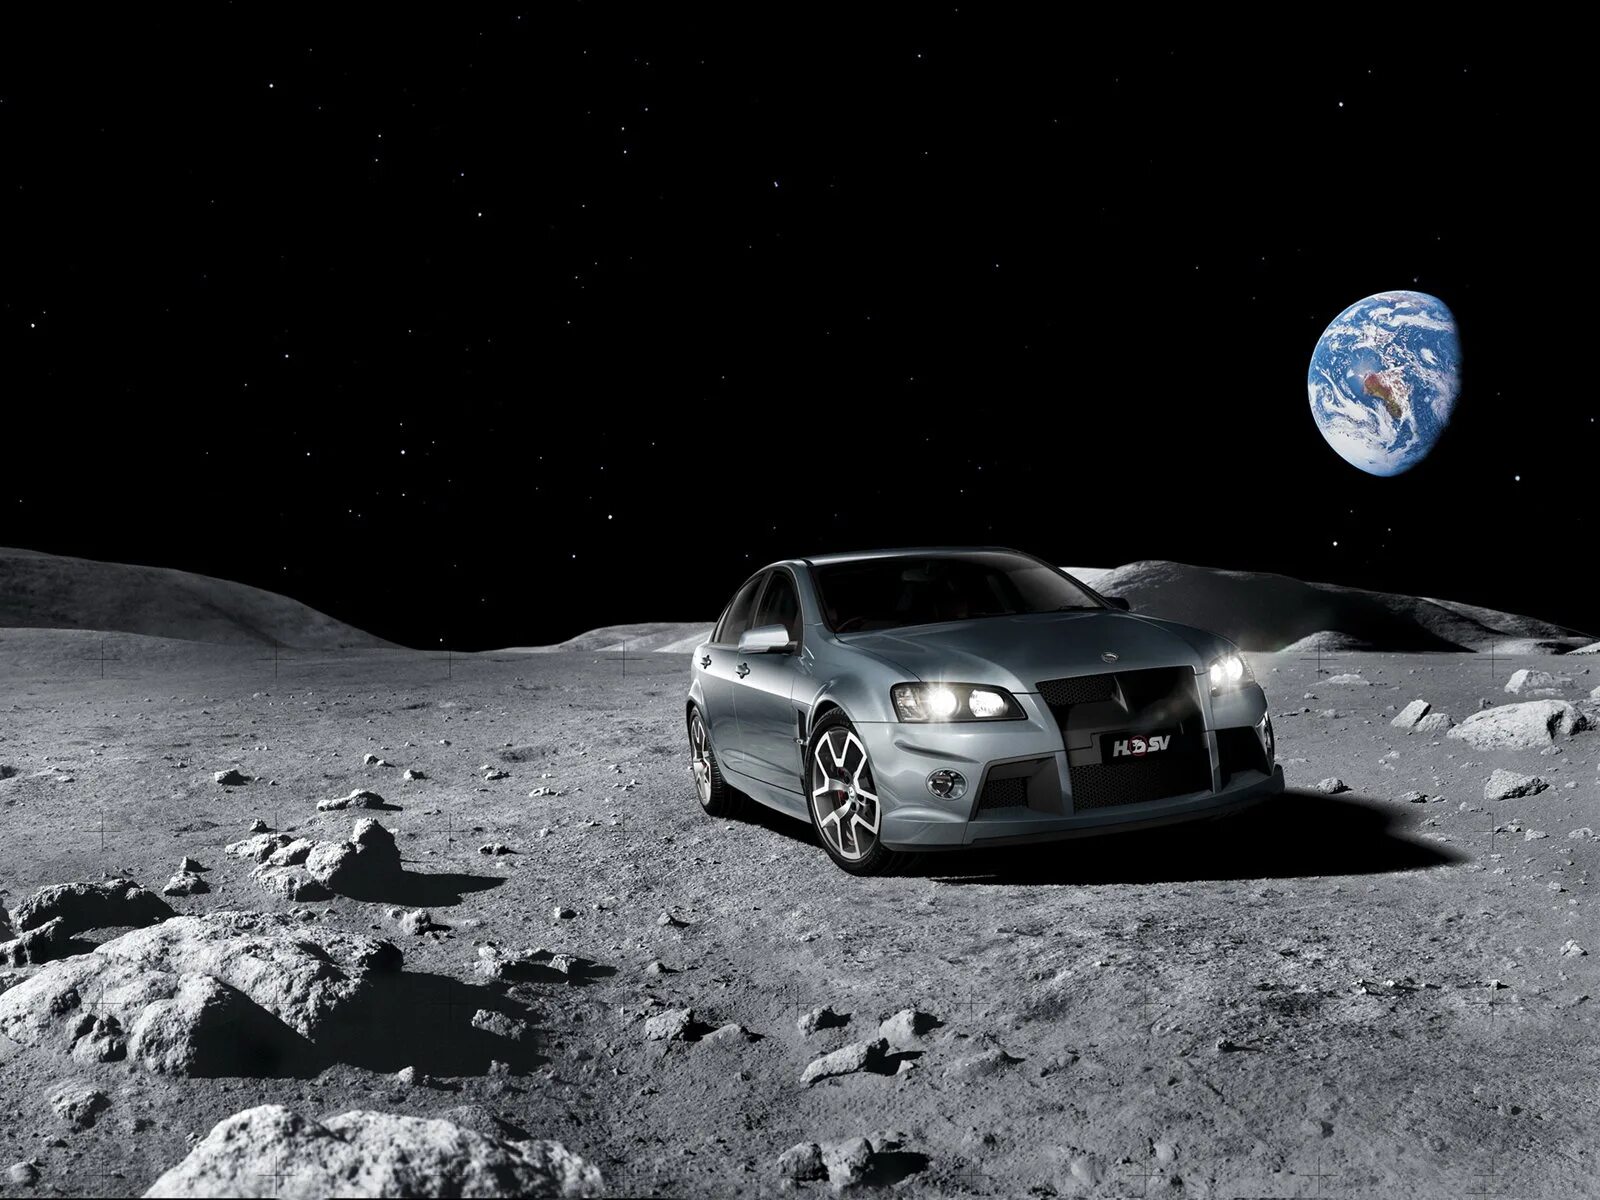 Space car. Space автомобиль 2010 года. HSV w427. Moon cars